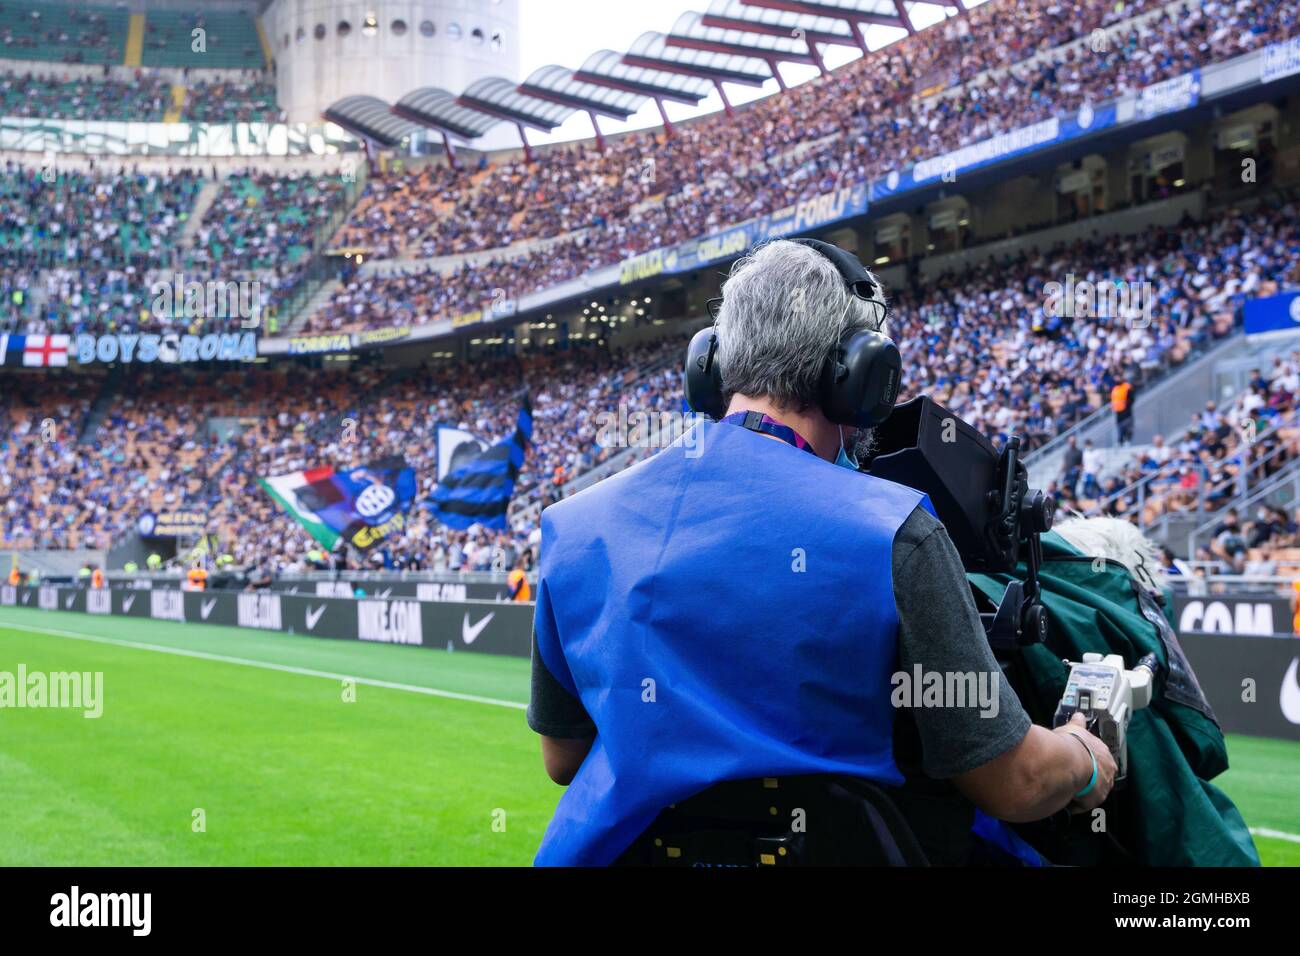 Milan, Italy - september 18 2021 - cameraman on the pitch - Serie A match  Inter- Bologna San Siro stadium Credit: Christian Santi/Alamy Live News  Stock Photo - Alamy